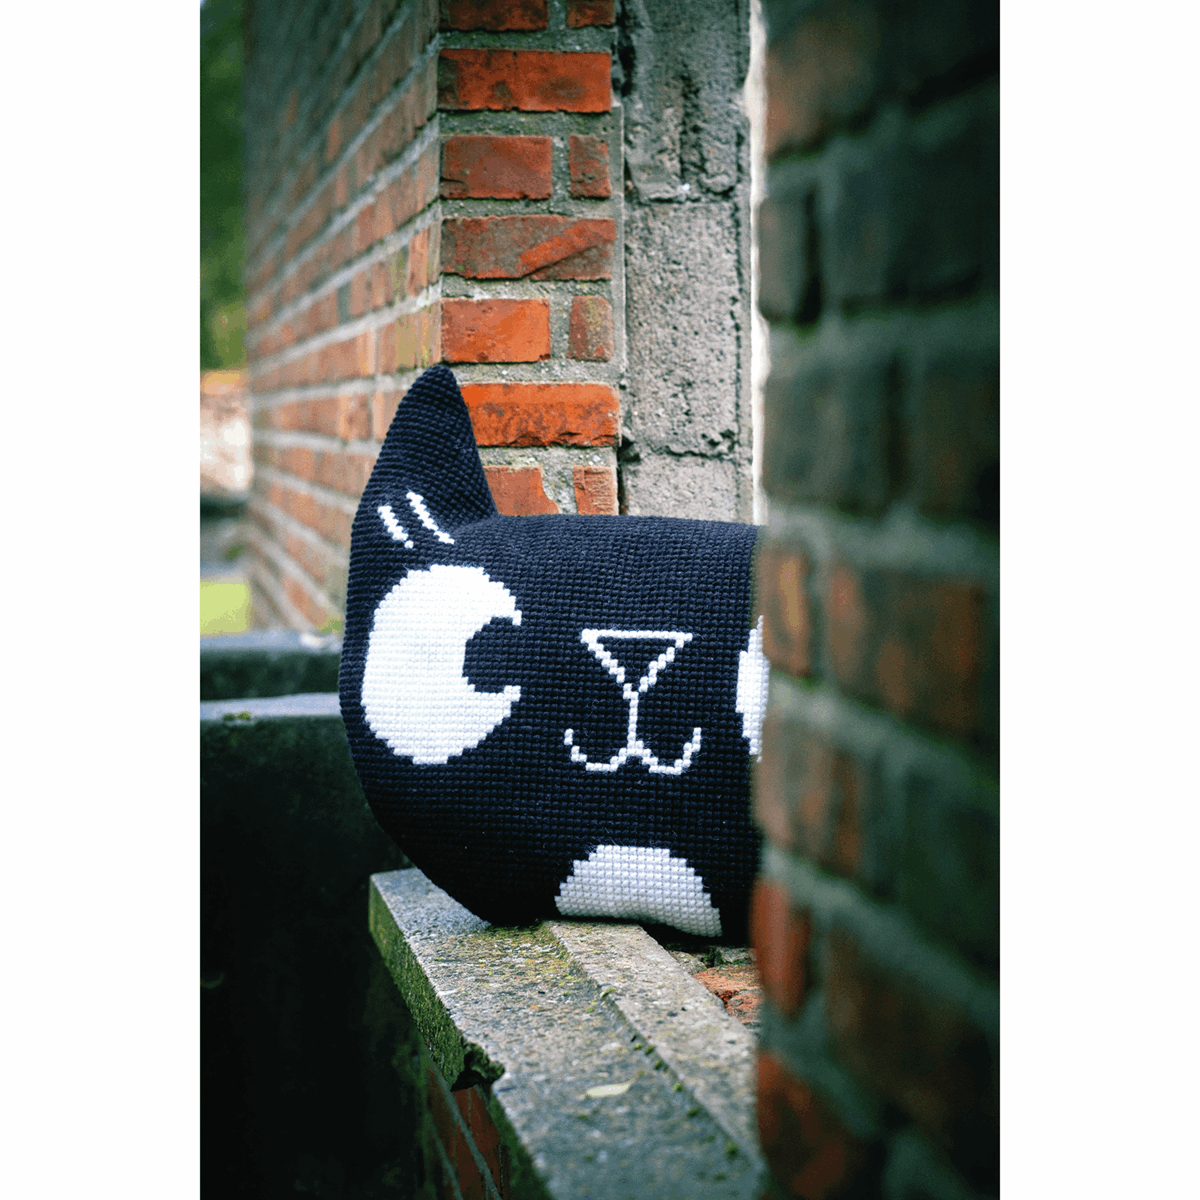 Vervaco Cross Stitch Cushion Kit - Eva Mouton: Black Cat